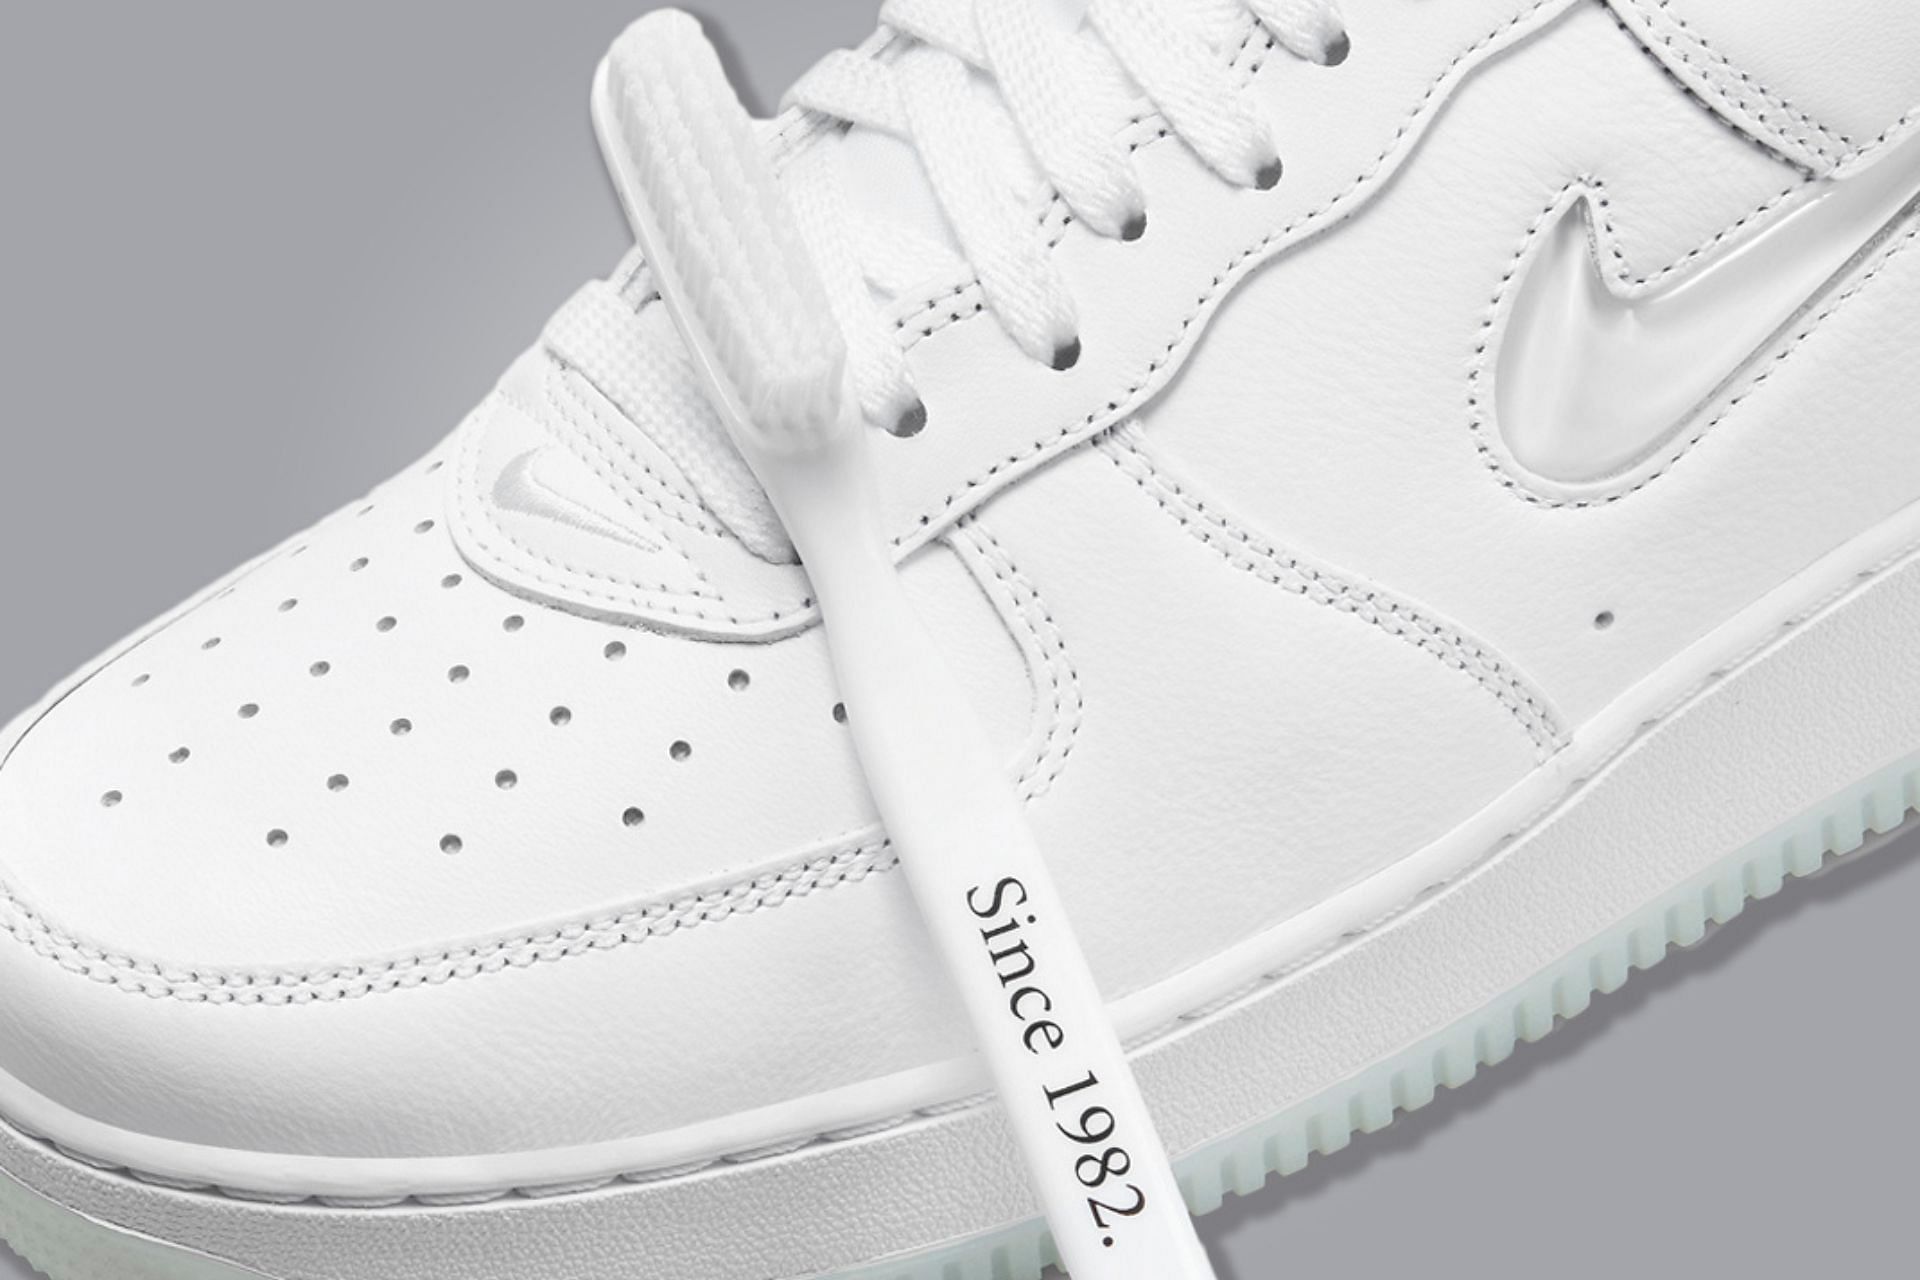 Nike Air Force 1 Low Jewel Triple White shoes (Image via Nike)